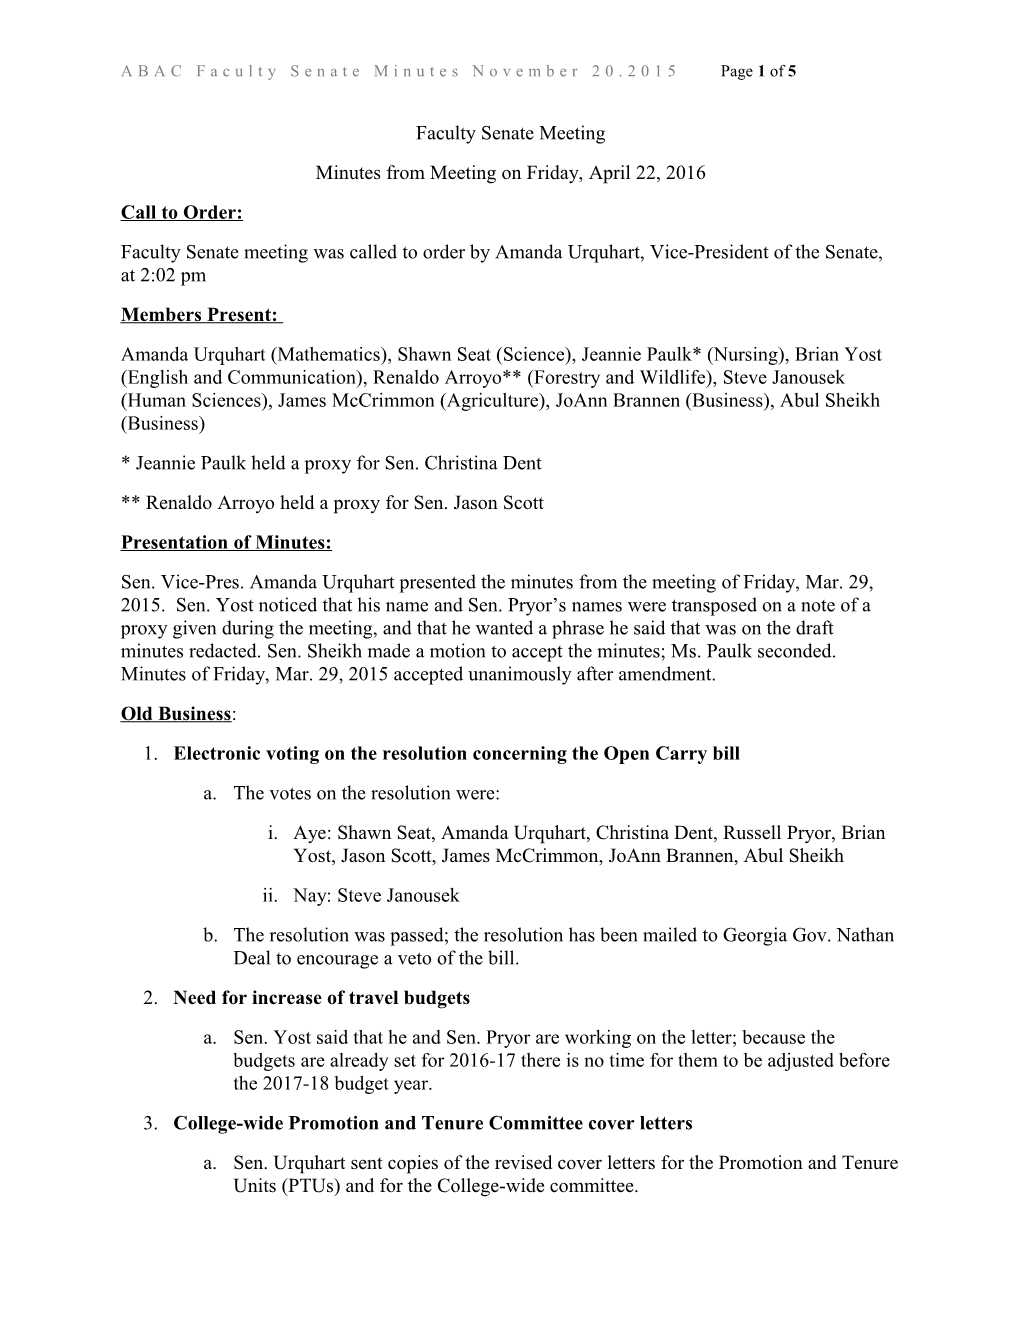 ABAC Faculty Senate Minutes November 20.2015 Page 4 of 4